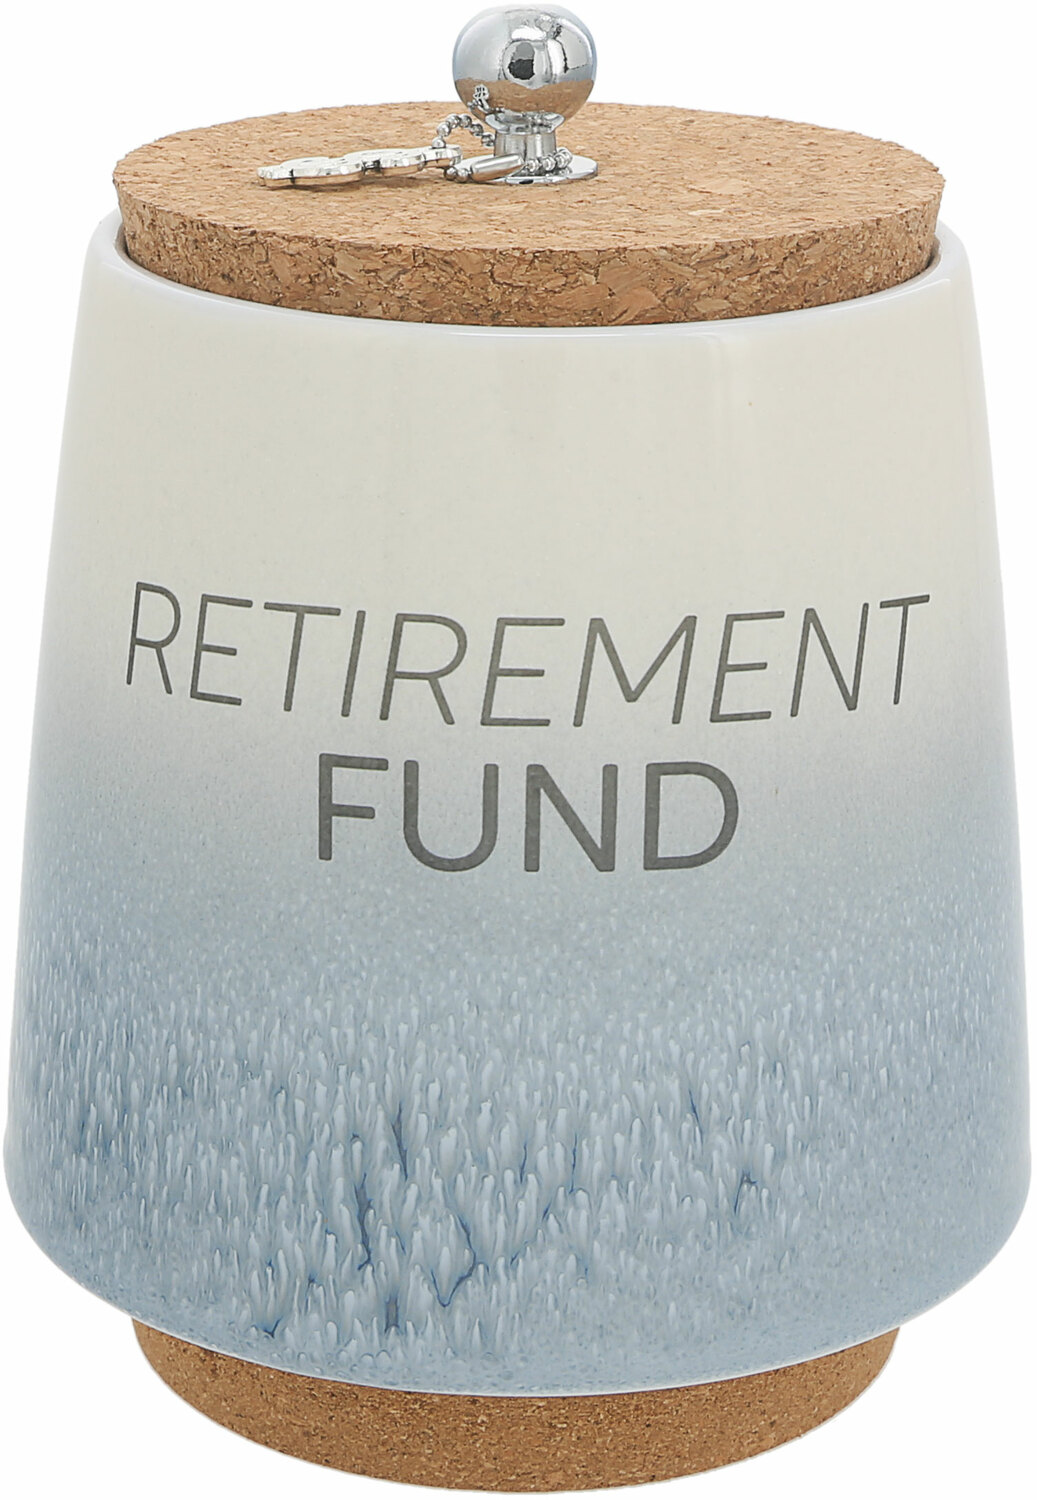 Retirement by So Much Fun-d - Retirement - 6.5" Ceramic Savings Bank